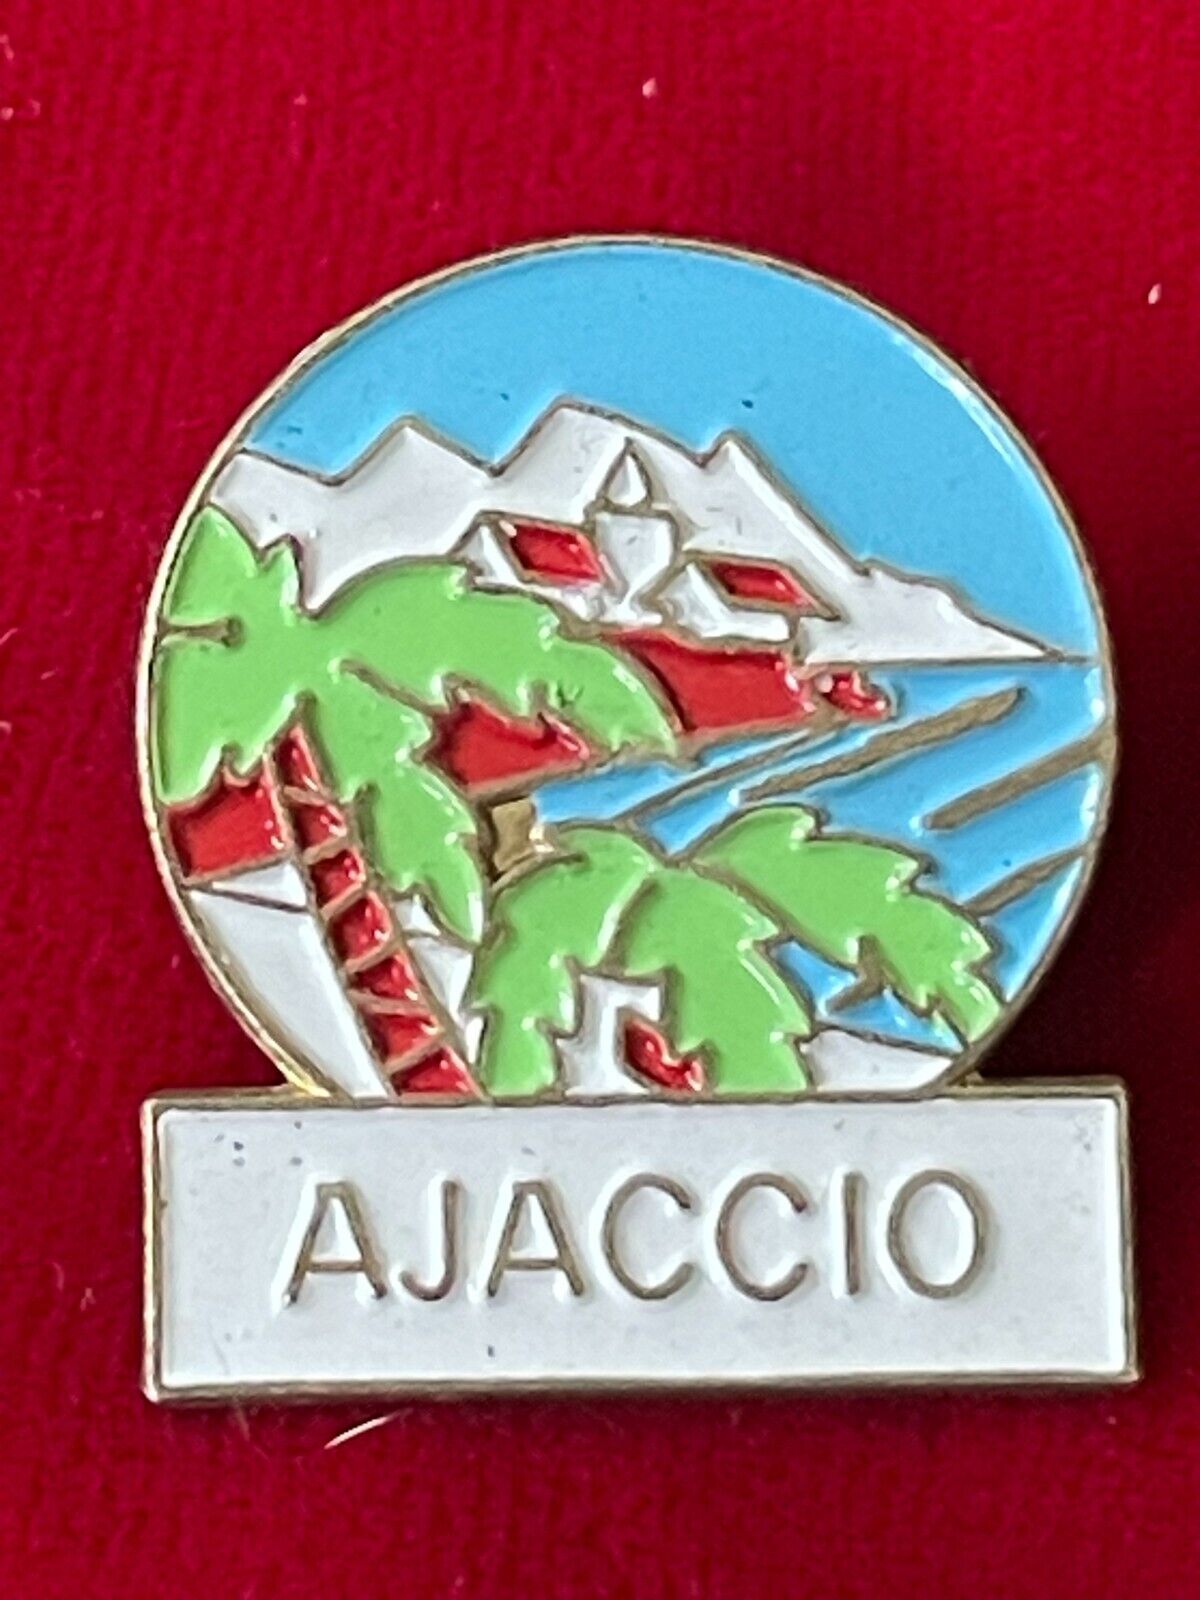 Ajaccio Capital Corsica French Island Mediterranean Sea Travel Souvenir Pin 1\